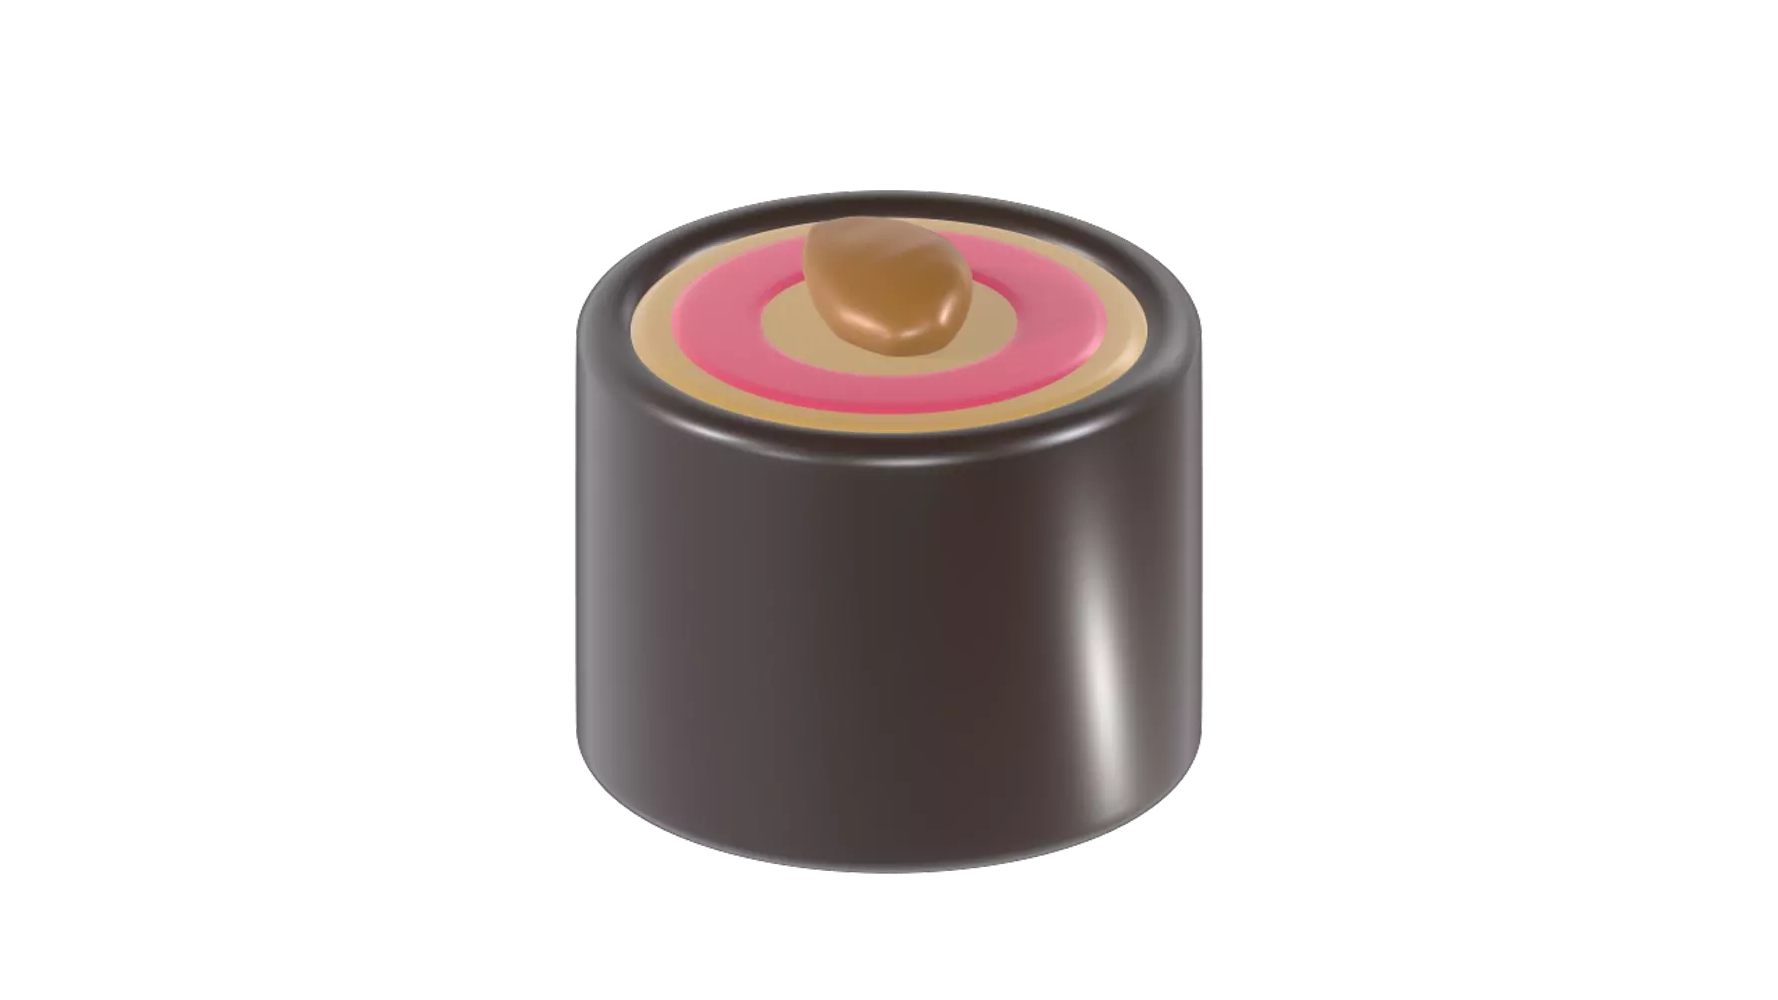 Chocolate Tube With Vanilla Cream & Almond 3D Graphic